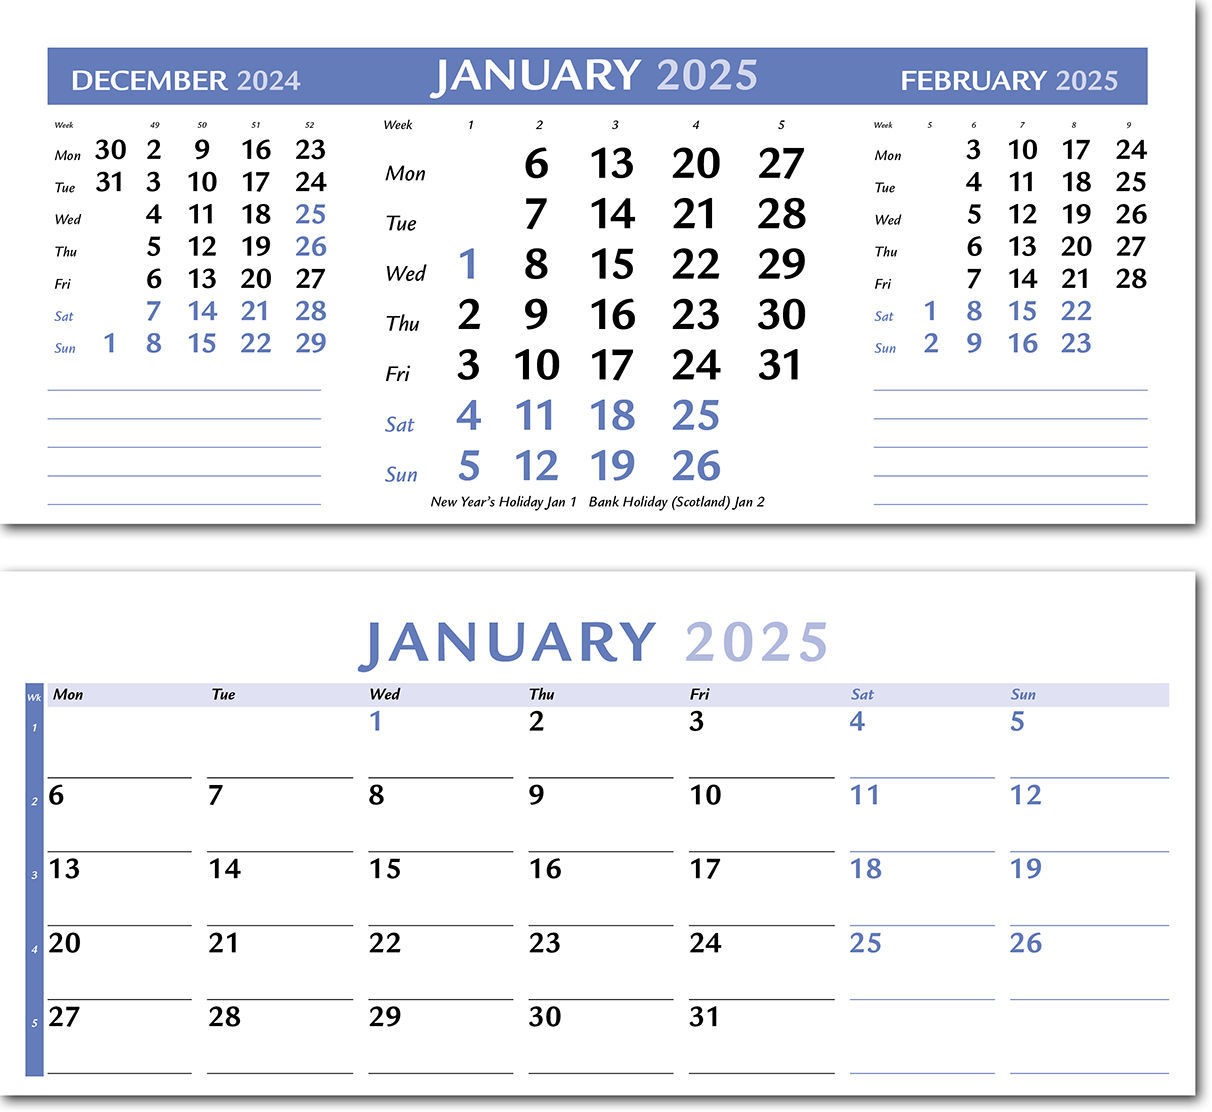 Commercial Desk Calendar